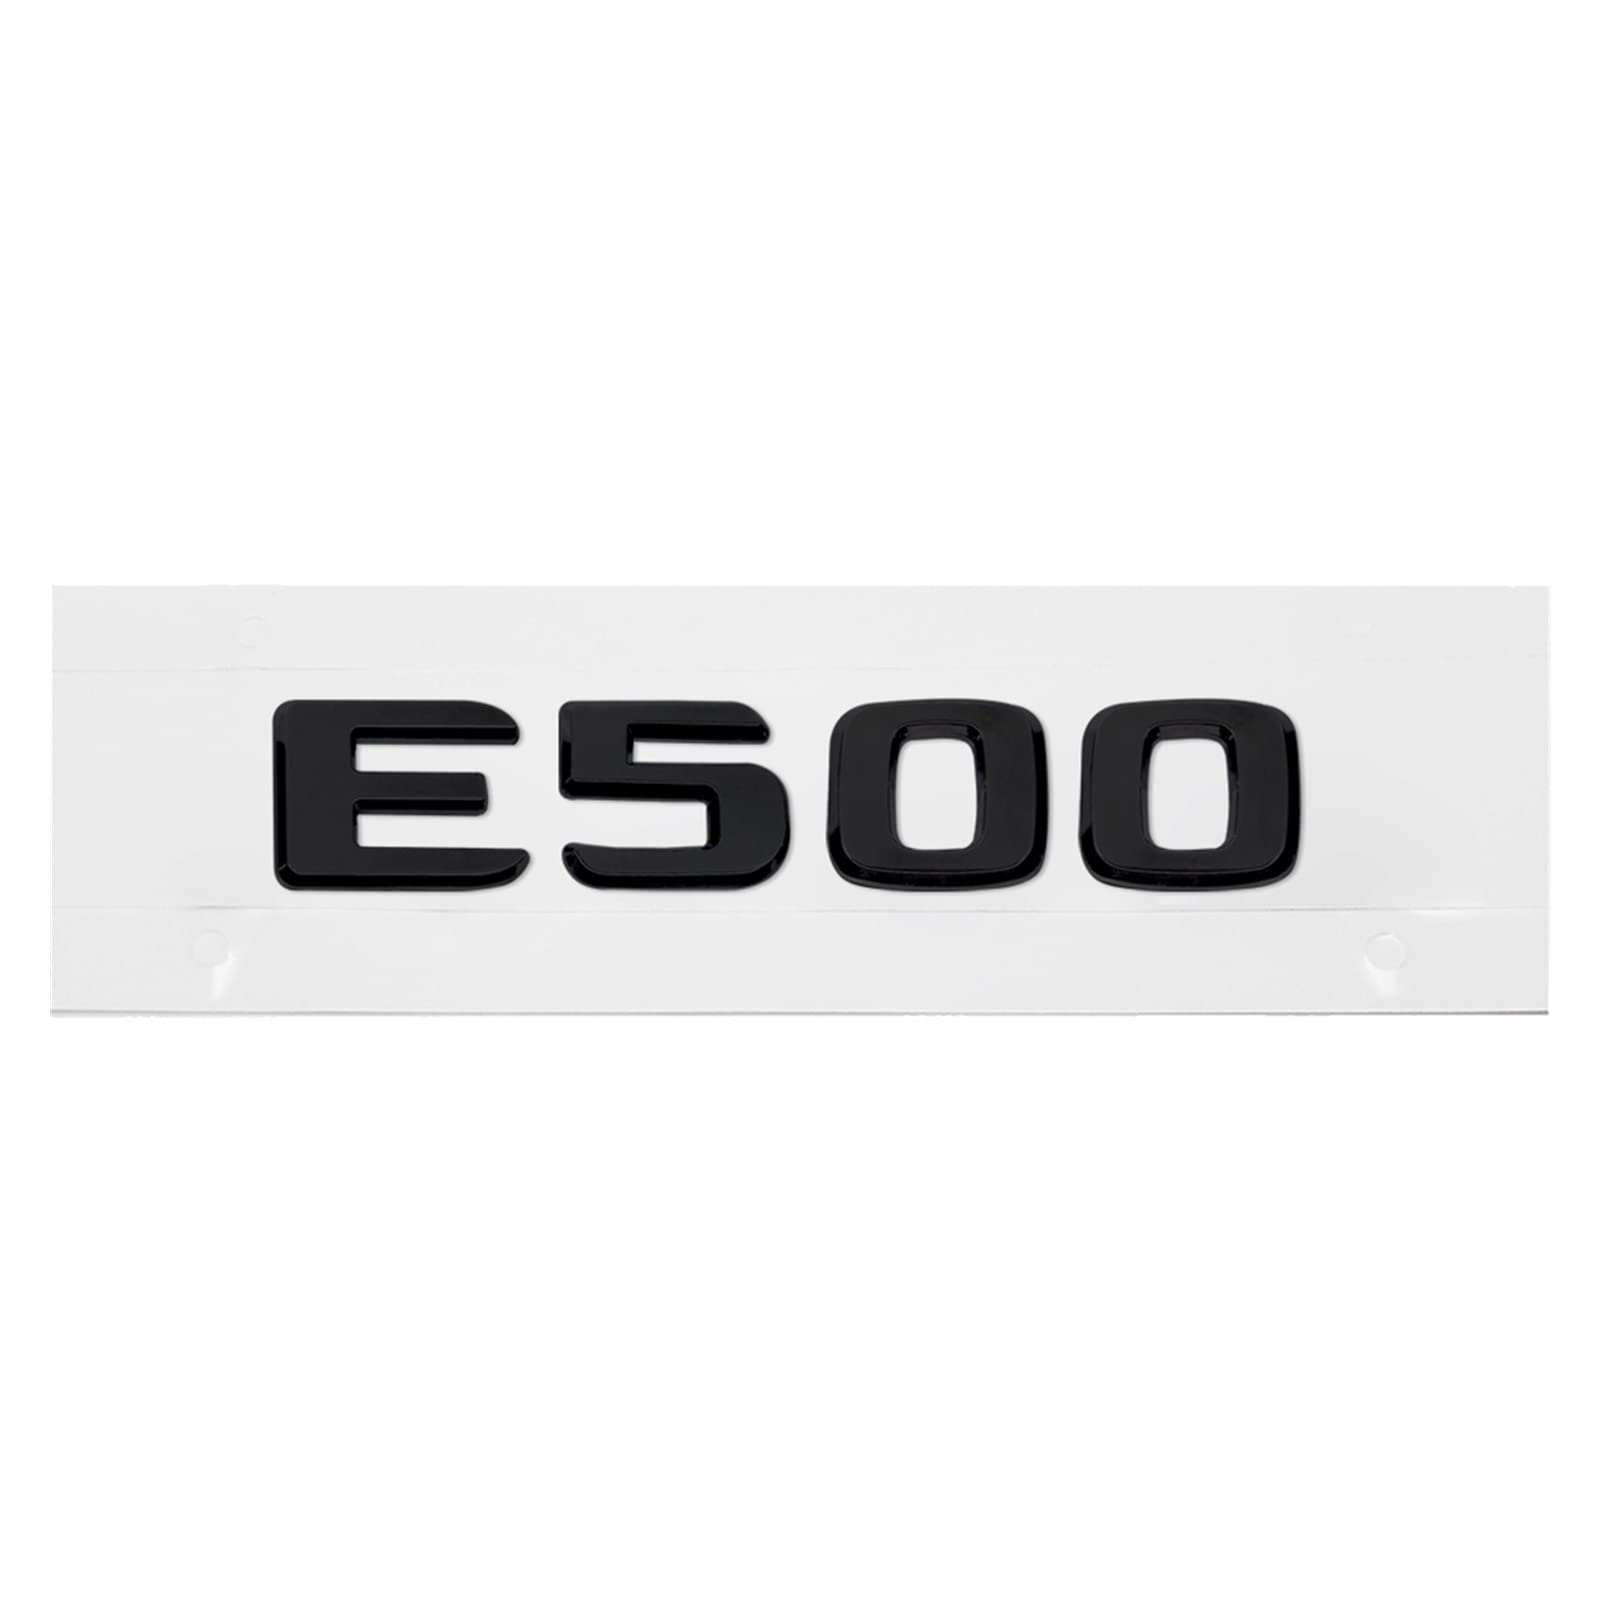 PRDECE Abs Mattschwarz E350 E350L E500. Auto-Kofferraum-Rückabzeichen-Emblem-Aufkleber for W114 W115 W123 W124 W210 W211 W212 W213 für das Auto (Color Name : E500, Size : Plastic)